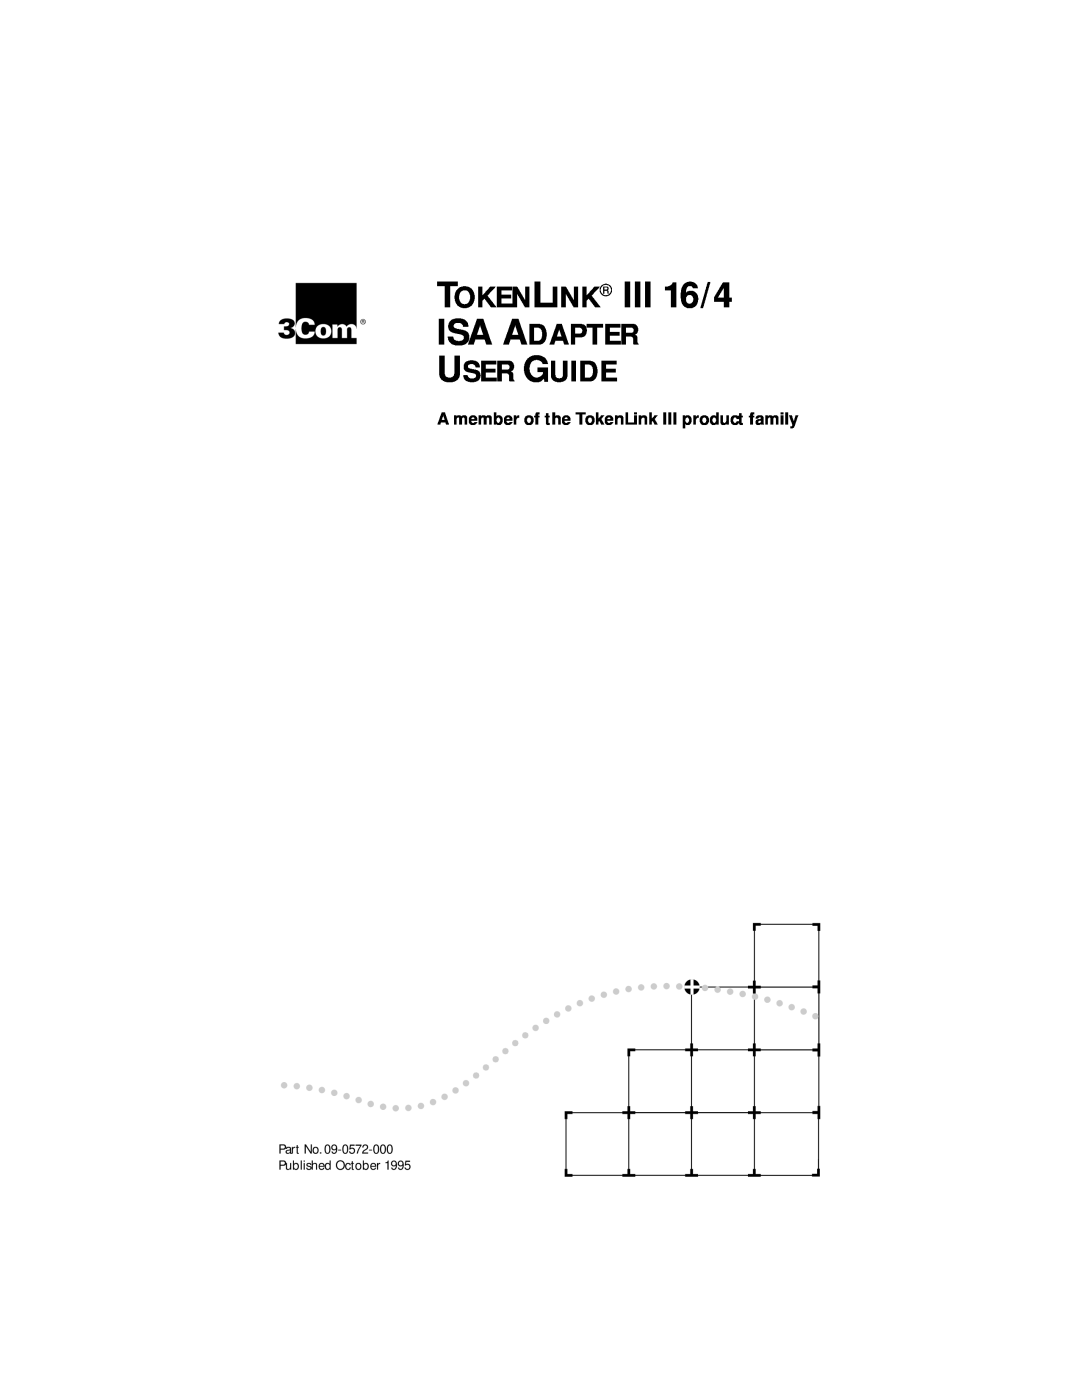 IBM 09-0572-000 manual Isa Adapter User Guide, TOKENLINK III 16/4 